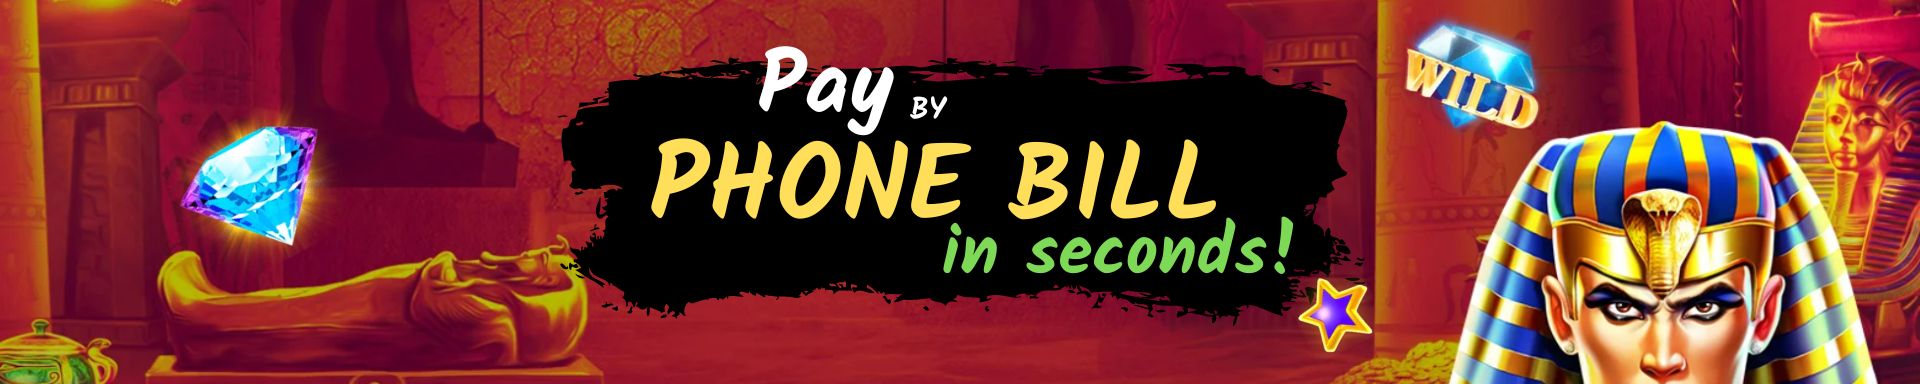 Pay by phone bill casino UK